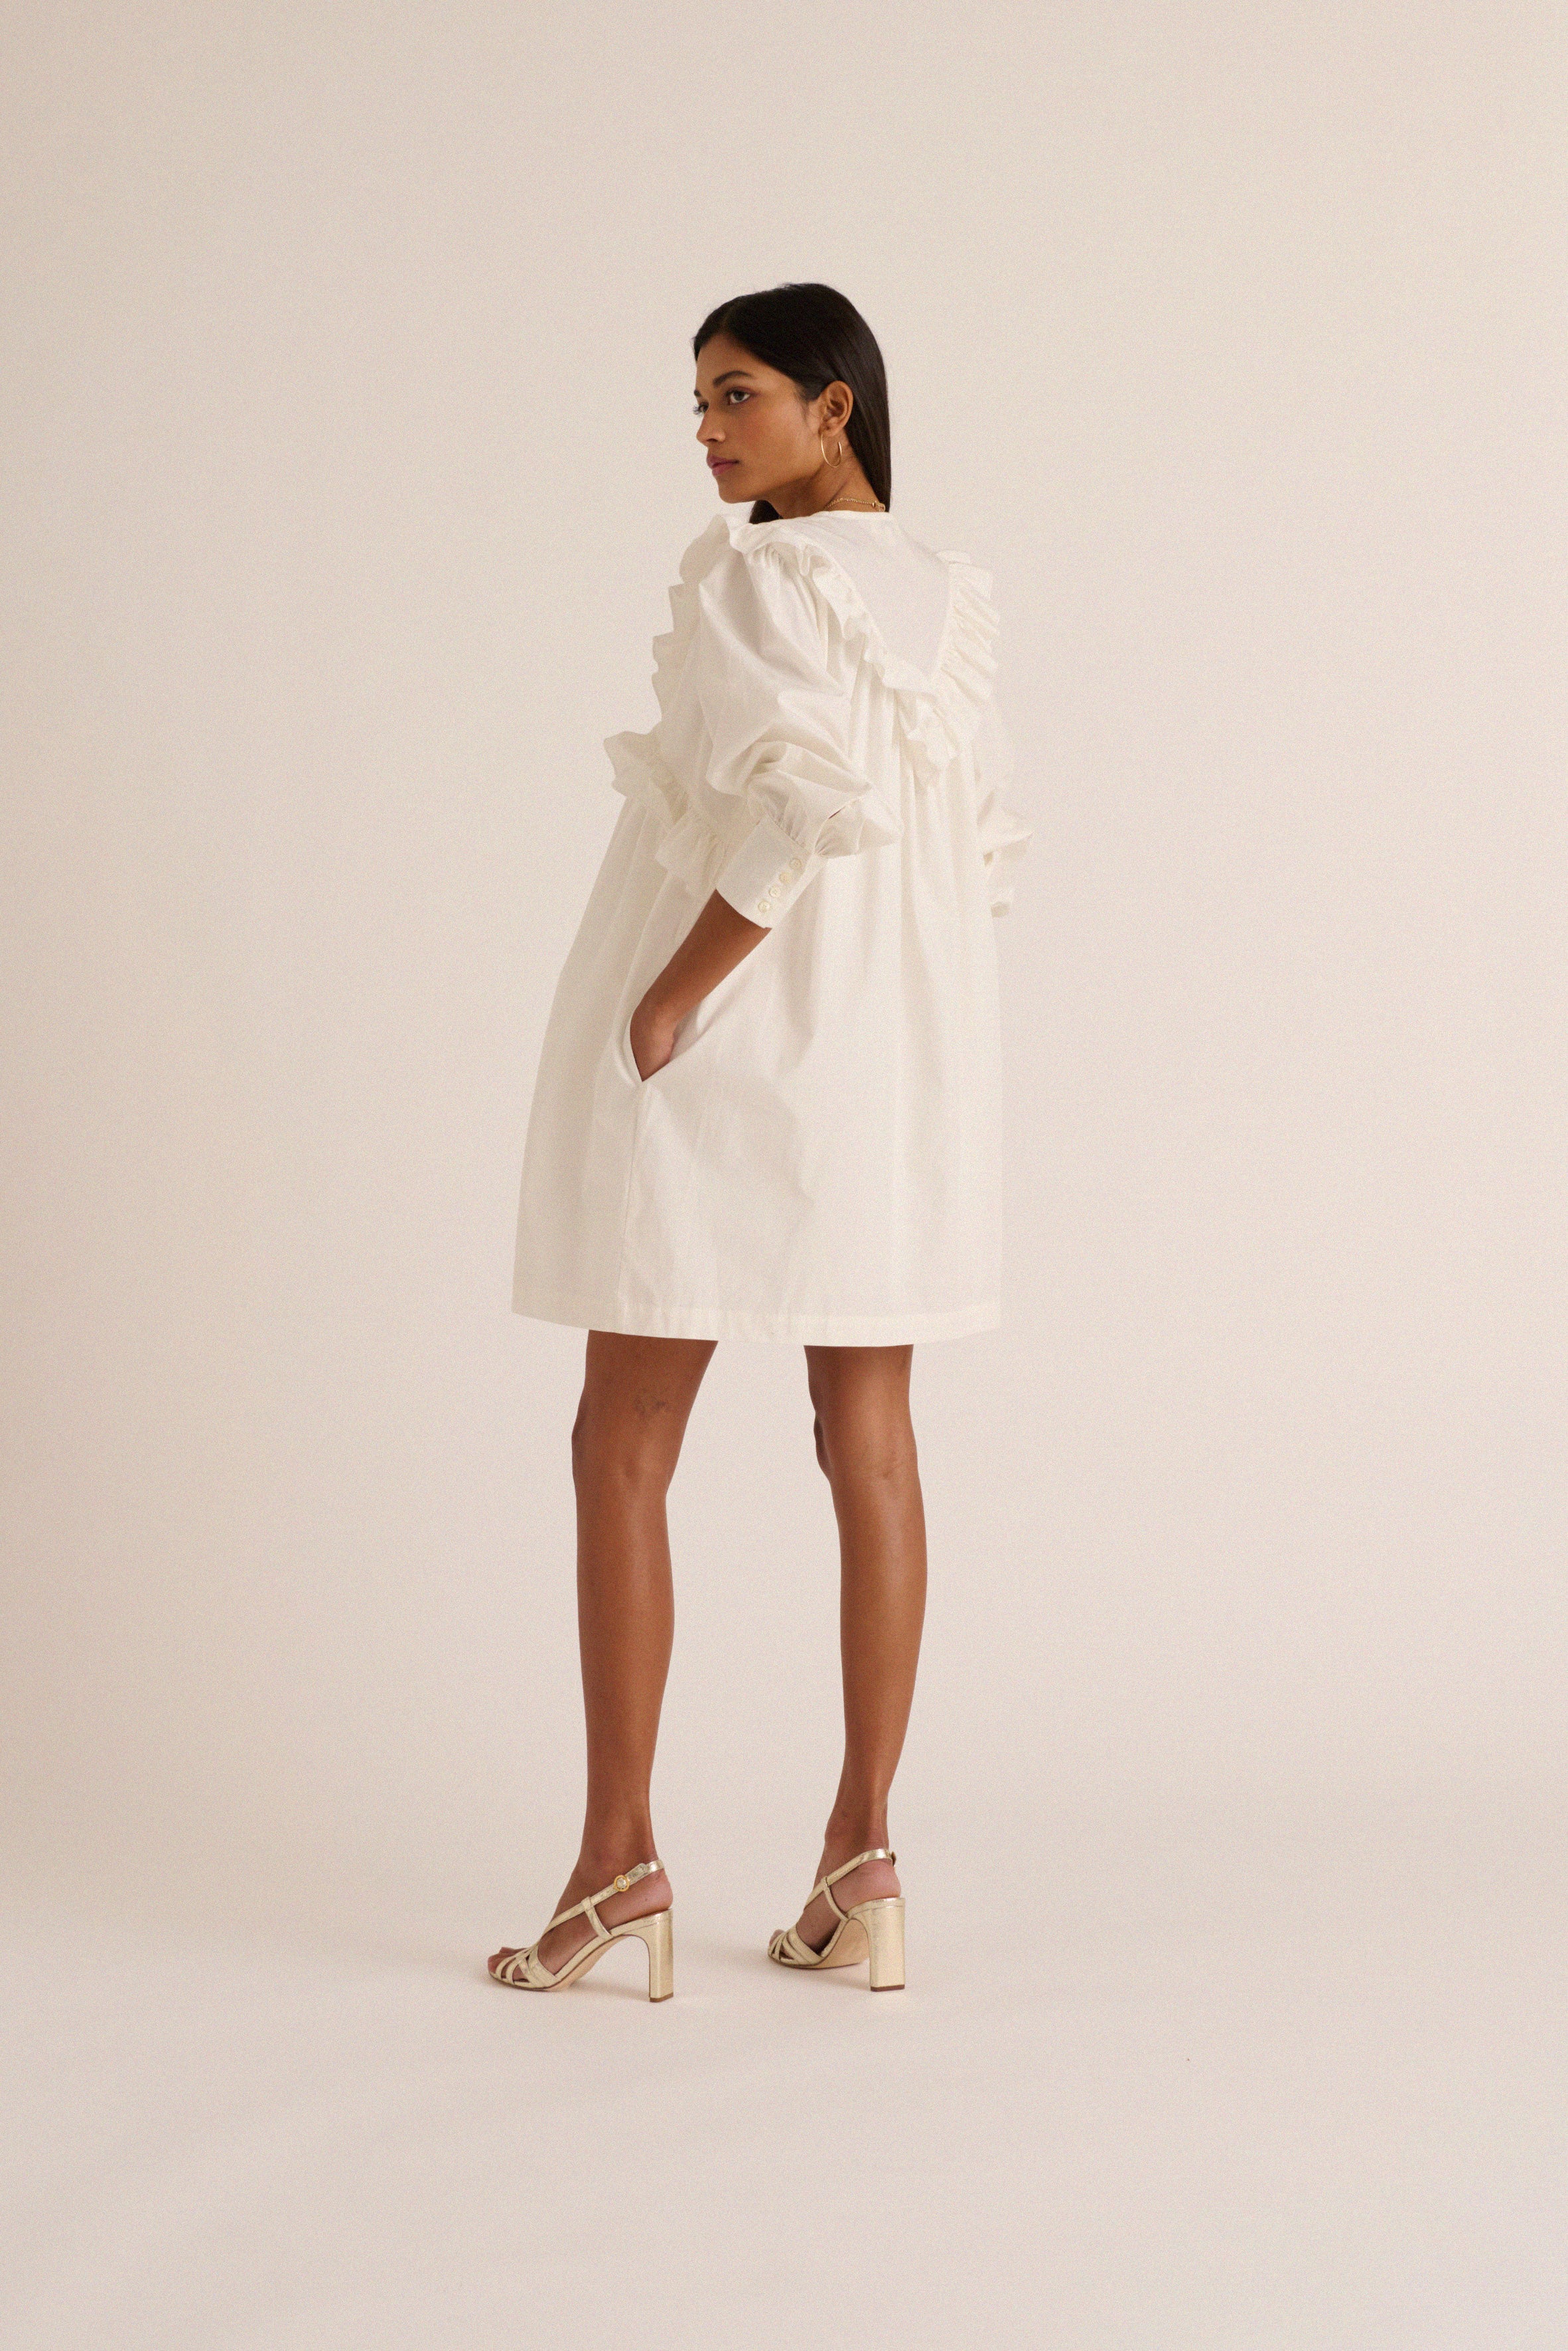 Natural white Armance dress